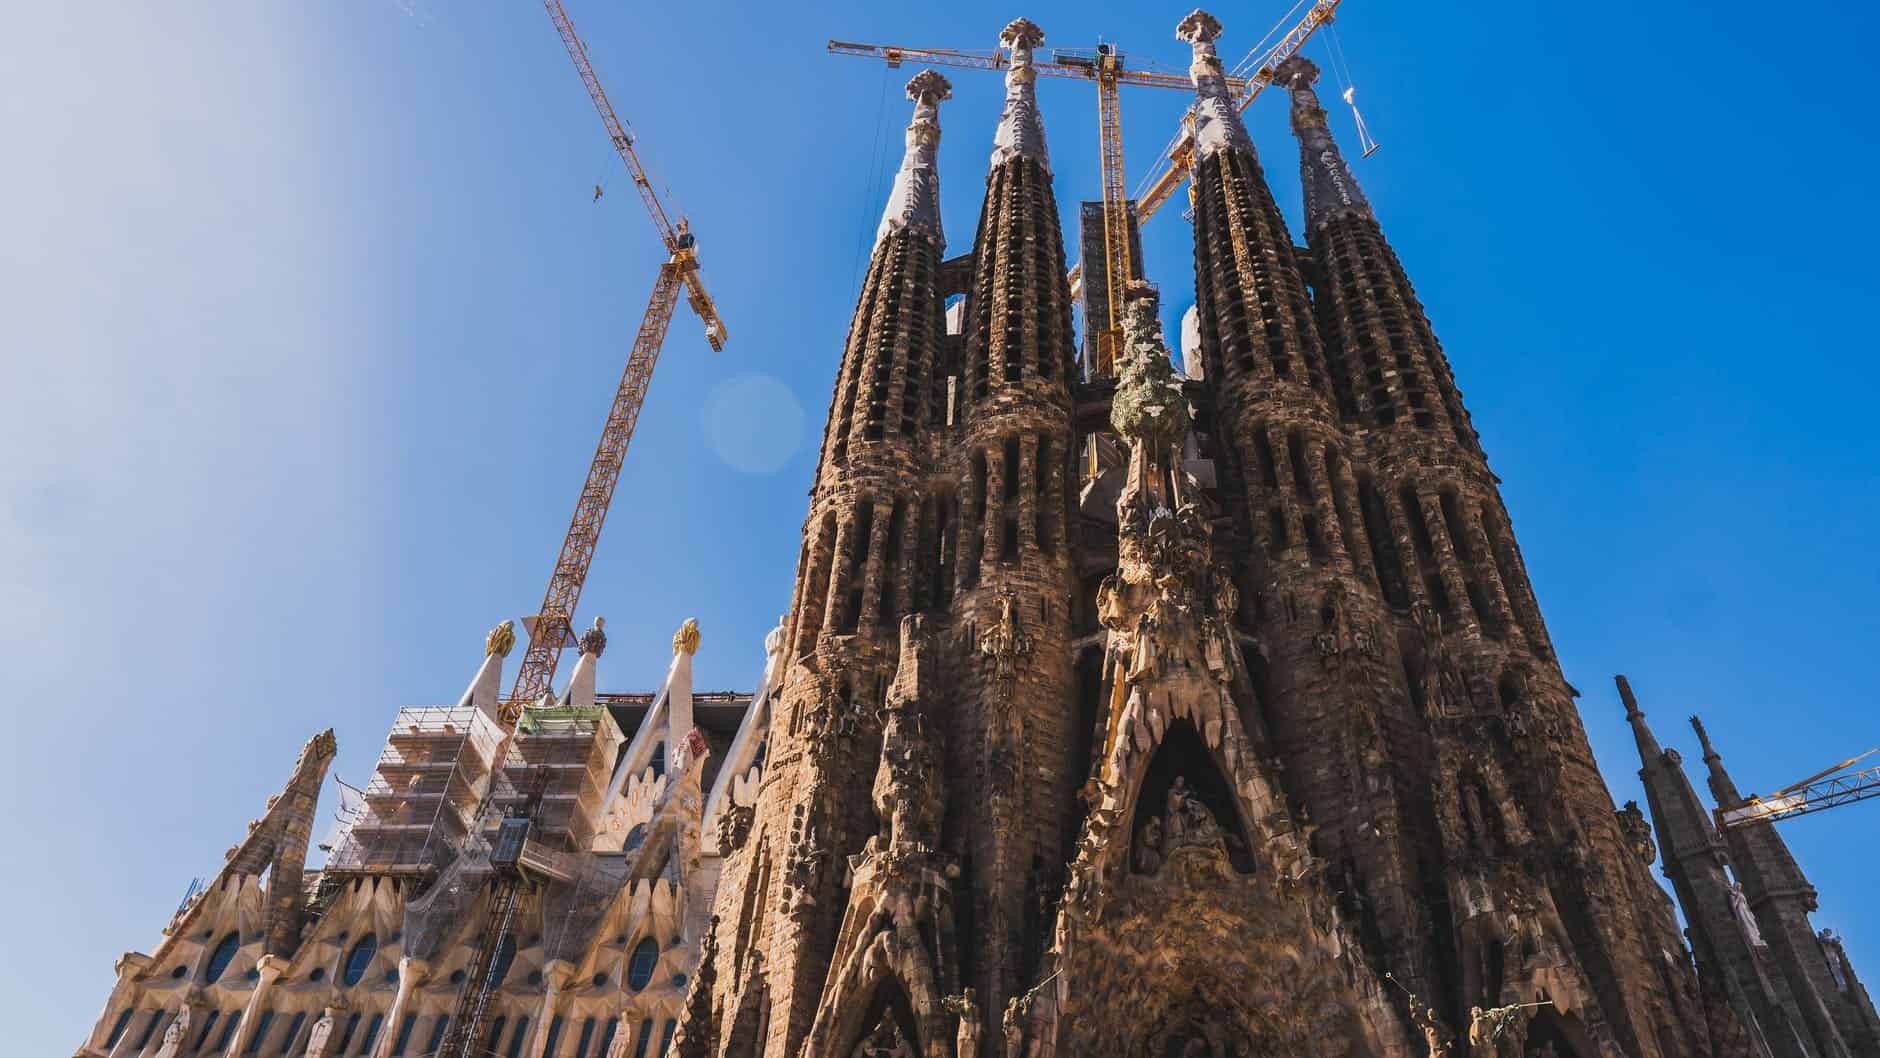 La Fira de Nadal de la Sagrada Familia in Barcelona